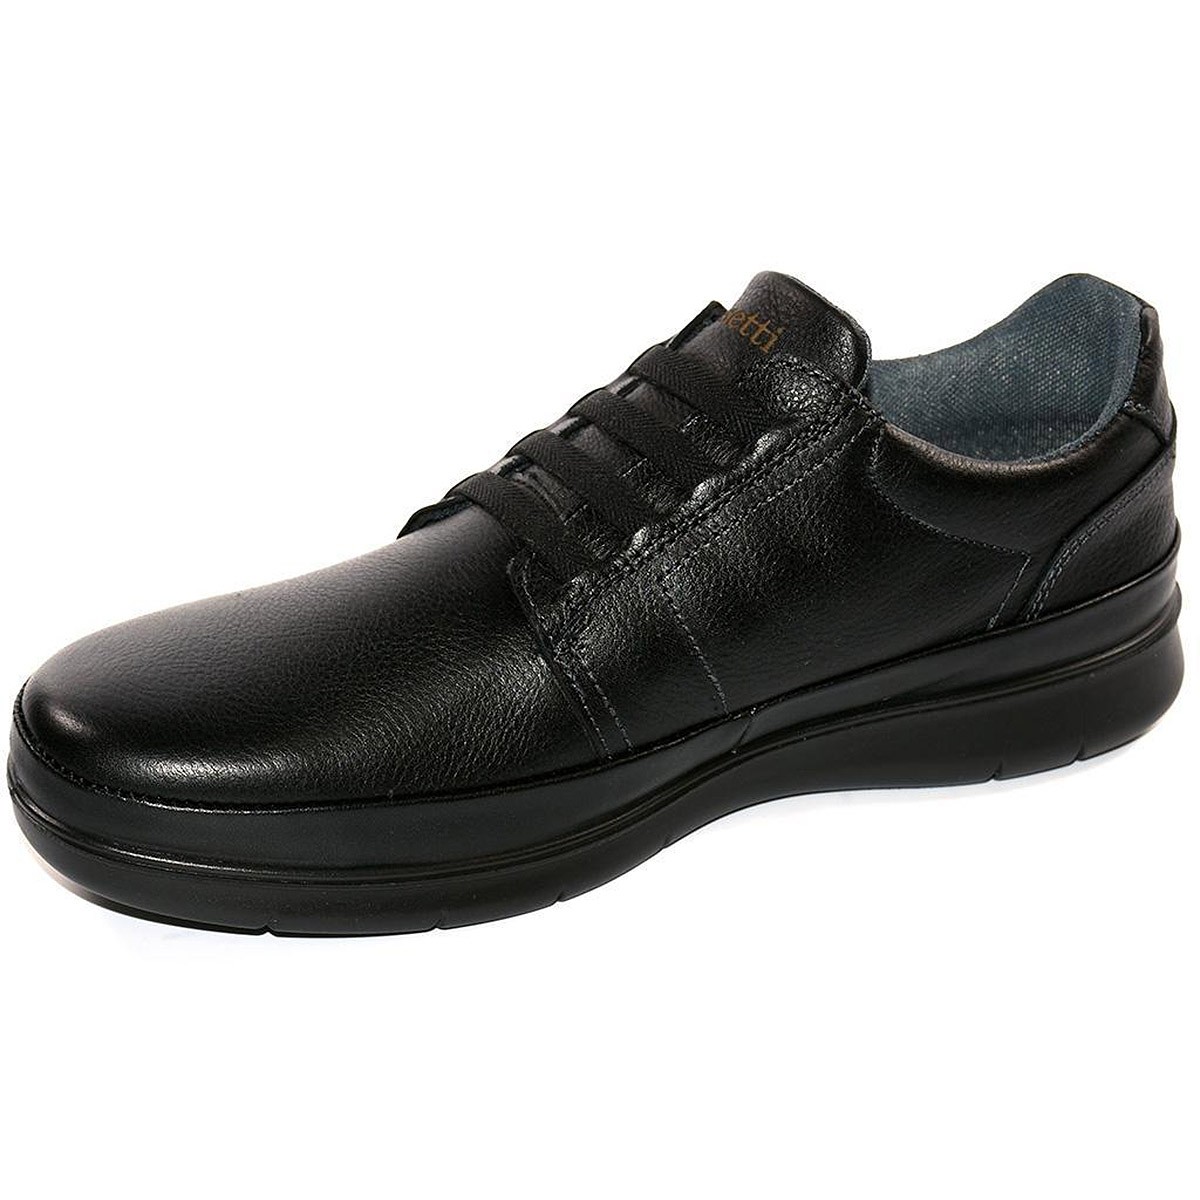 zapato velcro hombre Luisetti Color Negro Talla Calzado 39